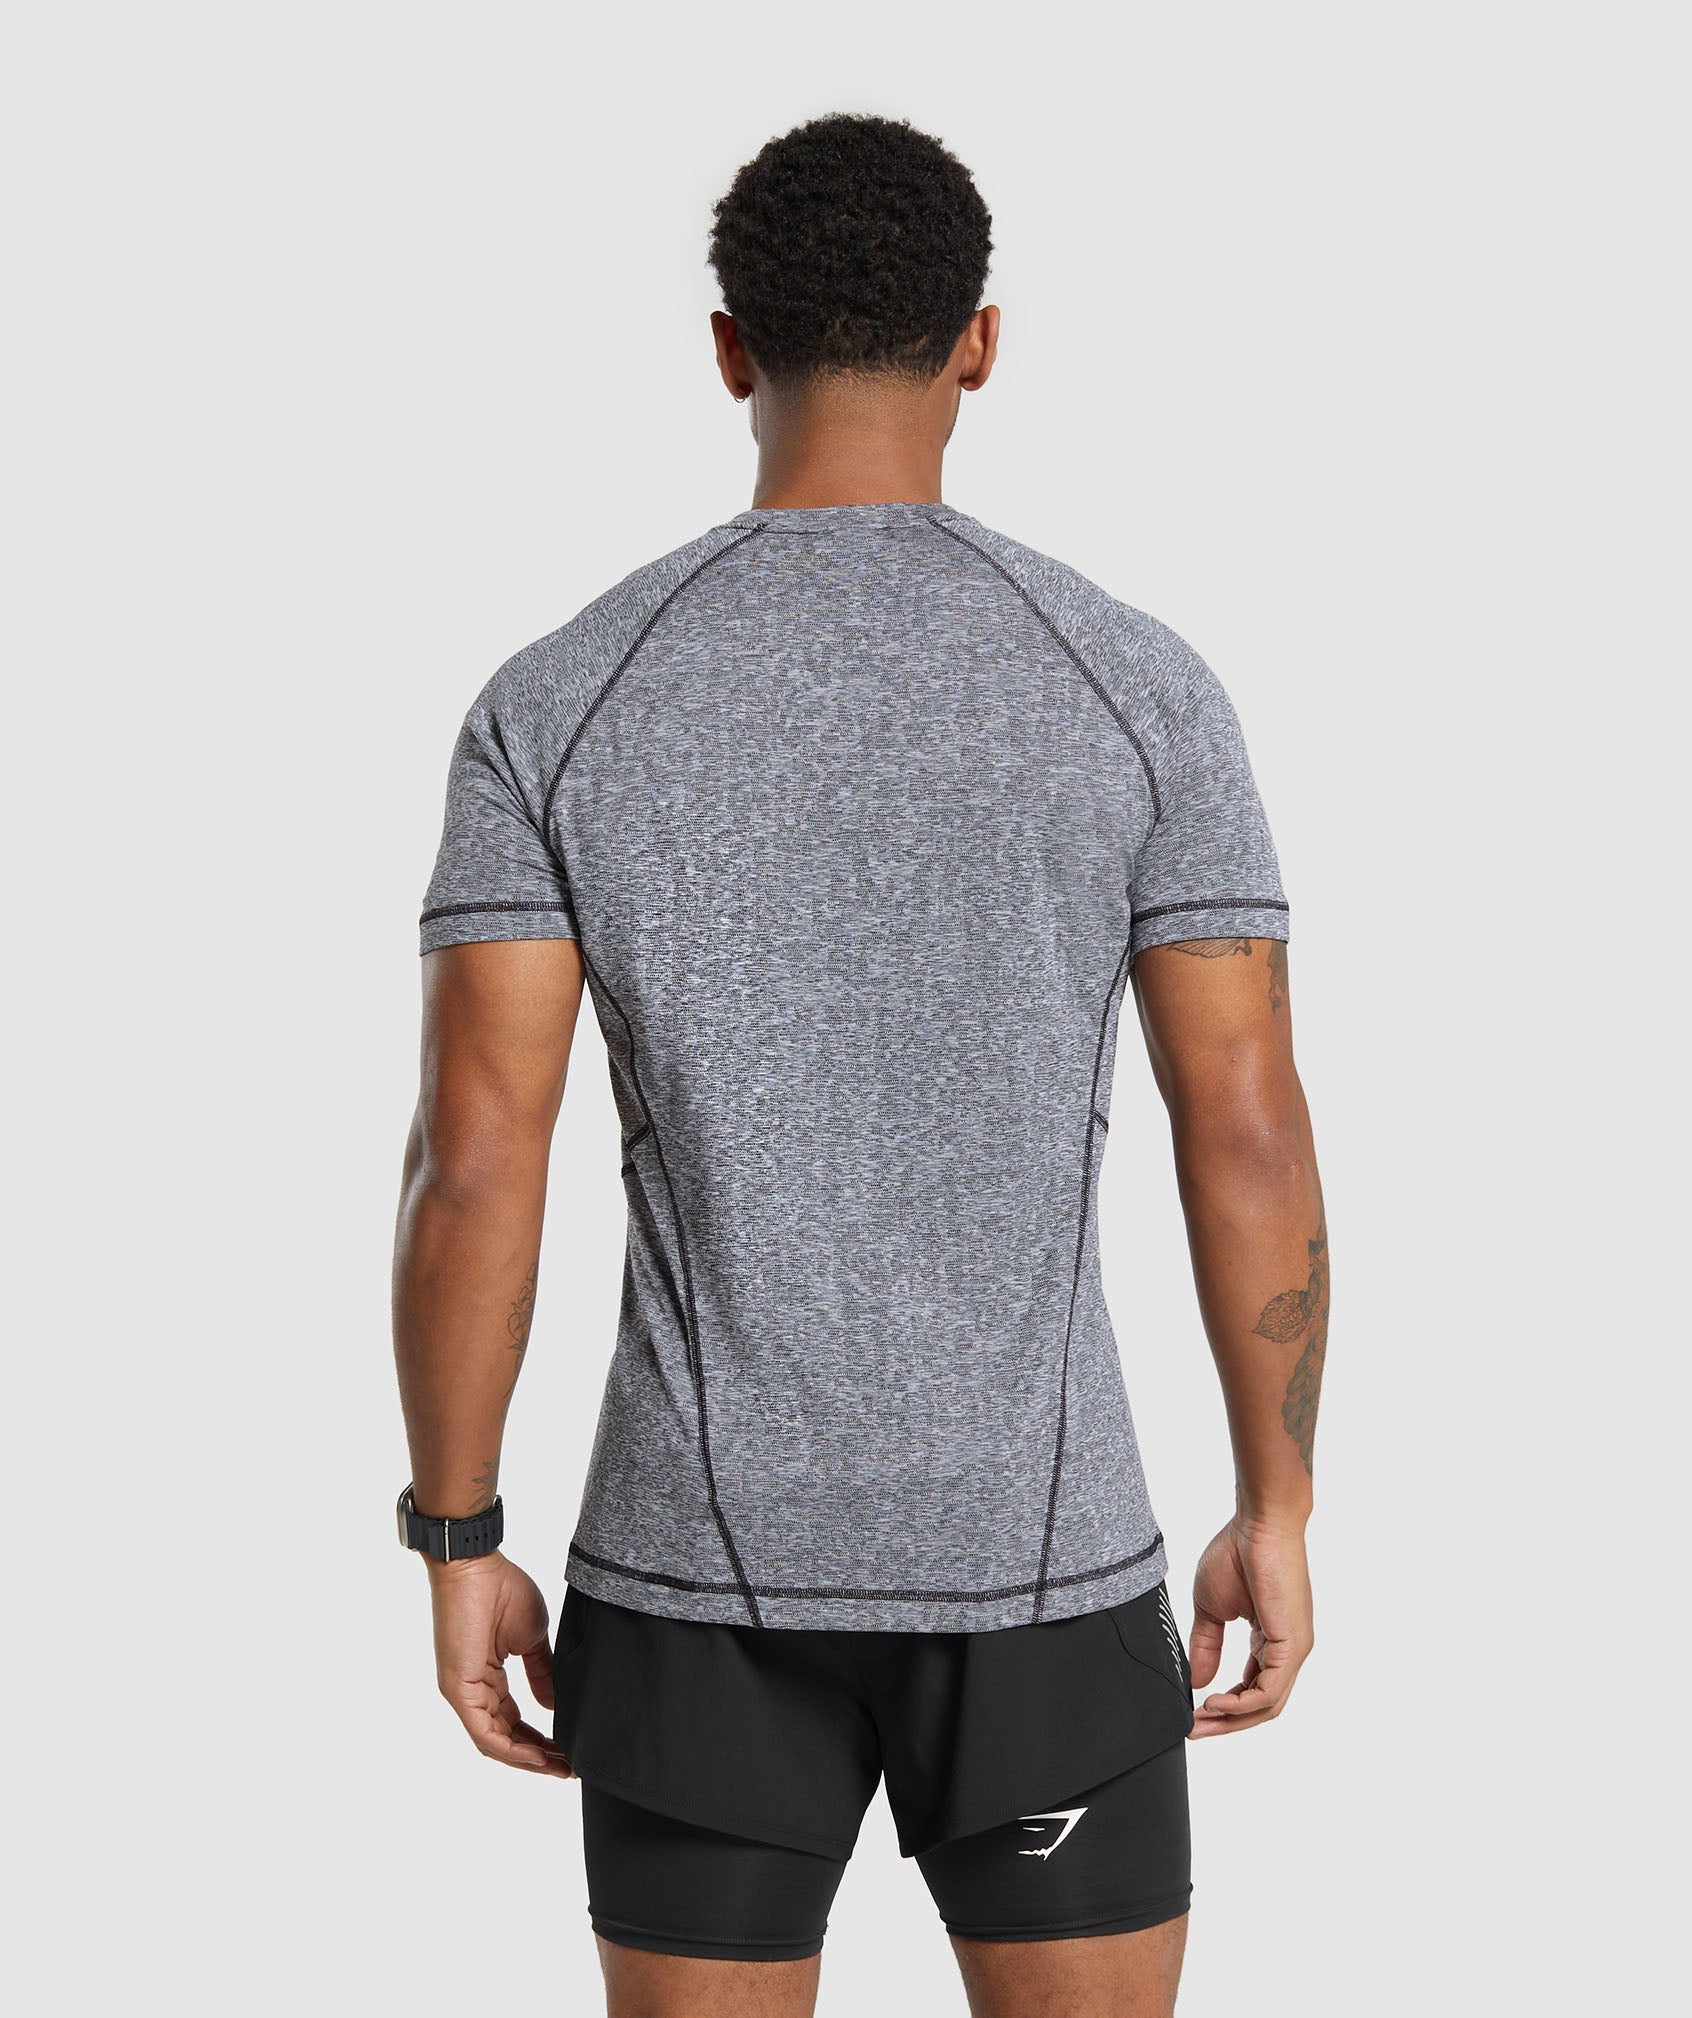 Apex T-Shirt in Black/Light Grey - view 2